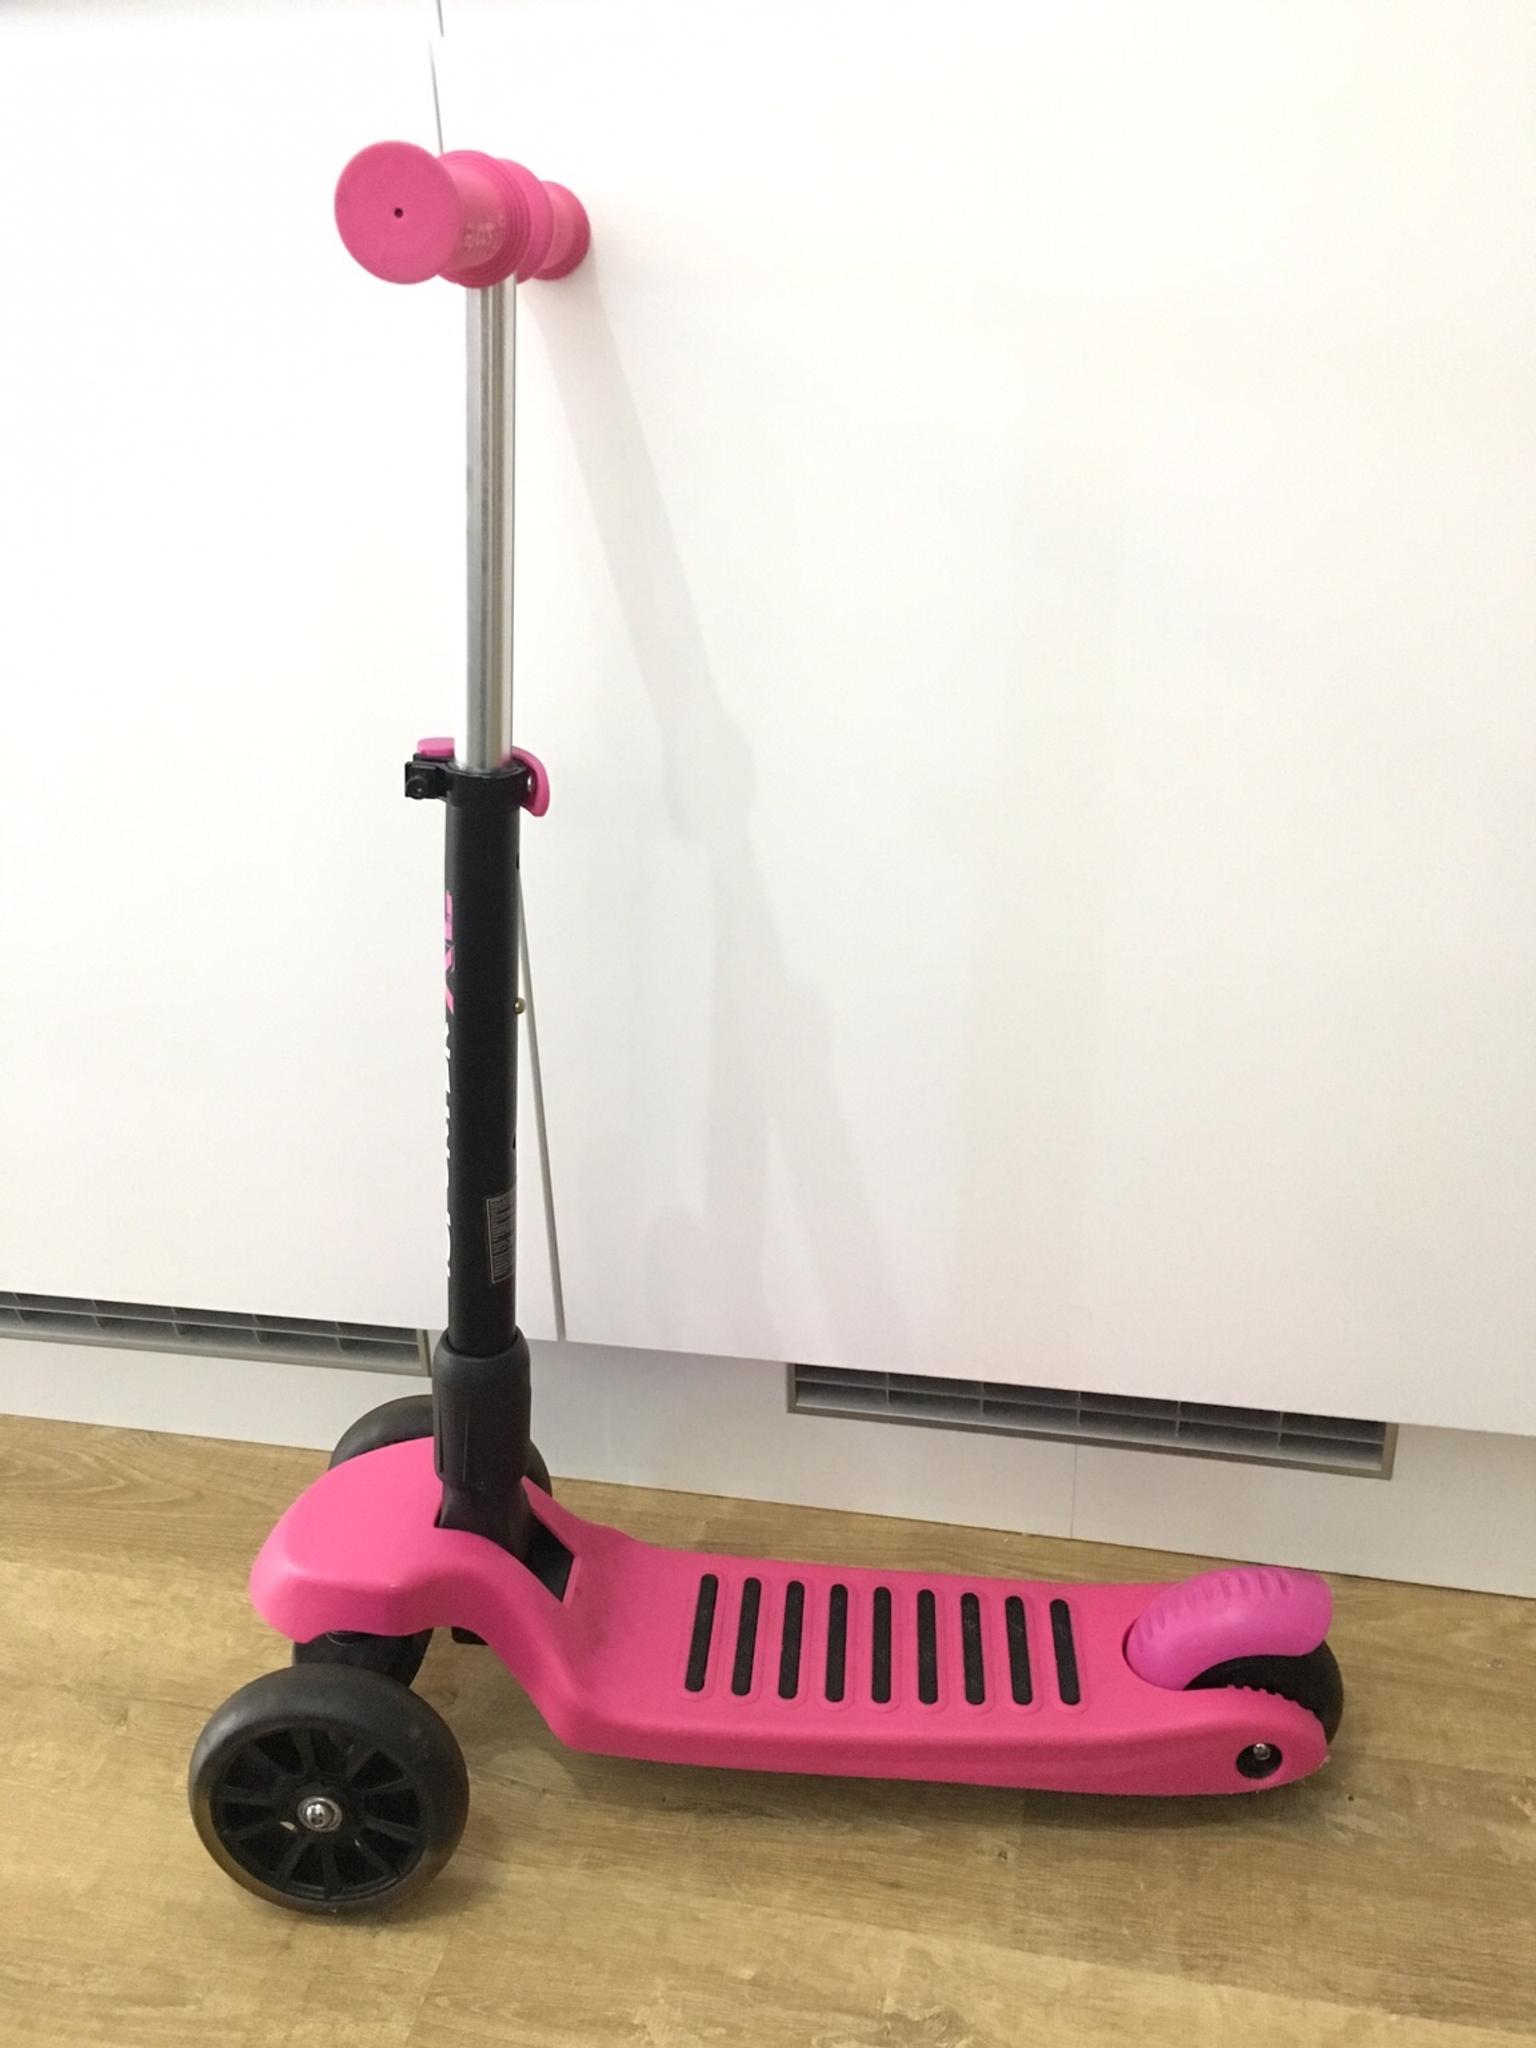 isporter xl led pink & black scooter